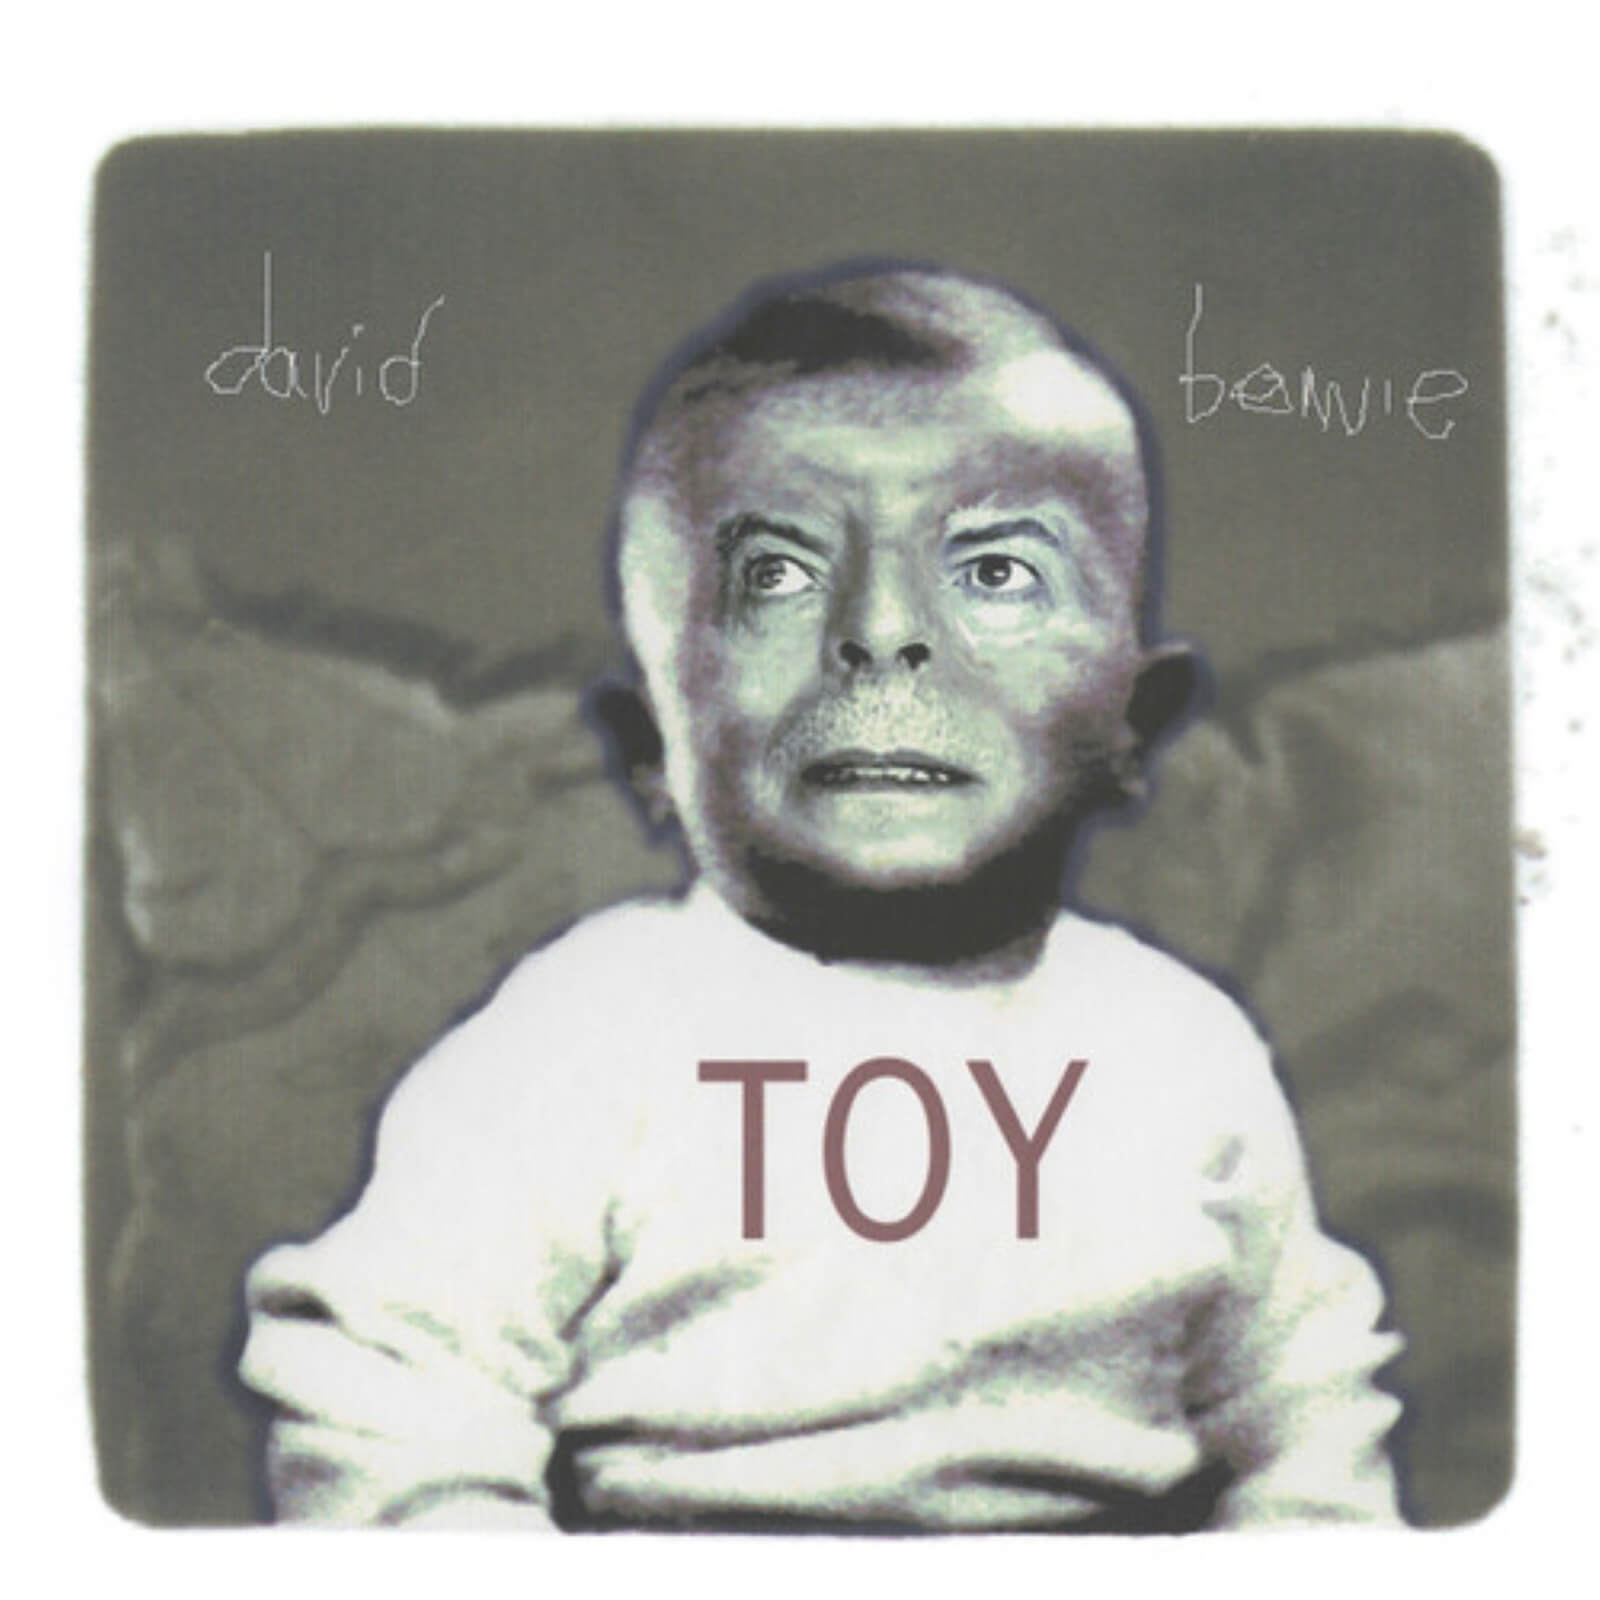 David Bowie - Toy (Toy:Box) 6x10  Box Set